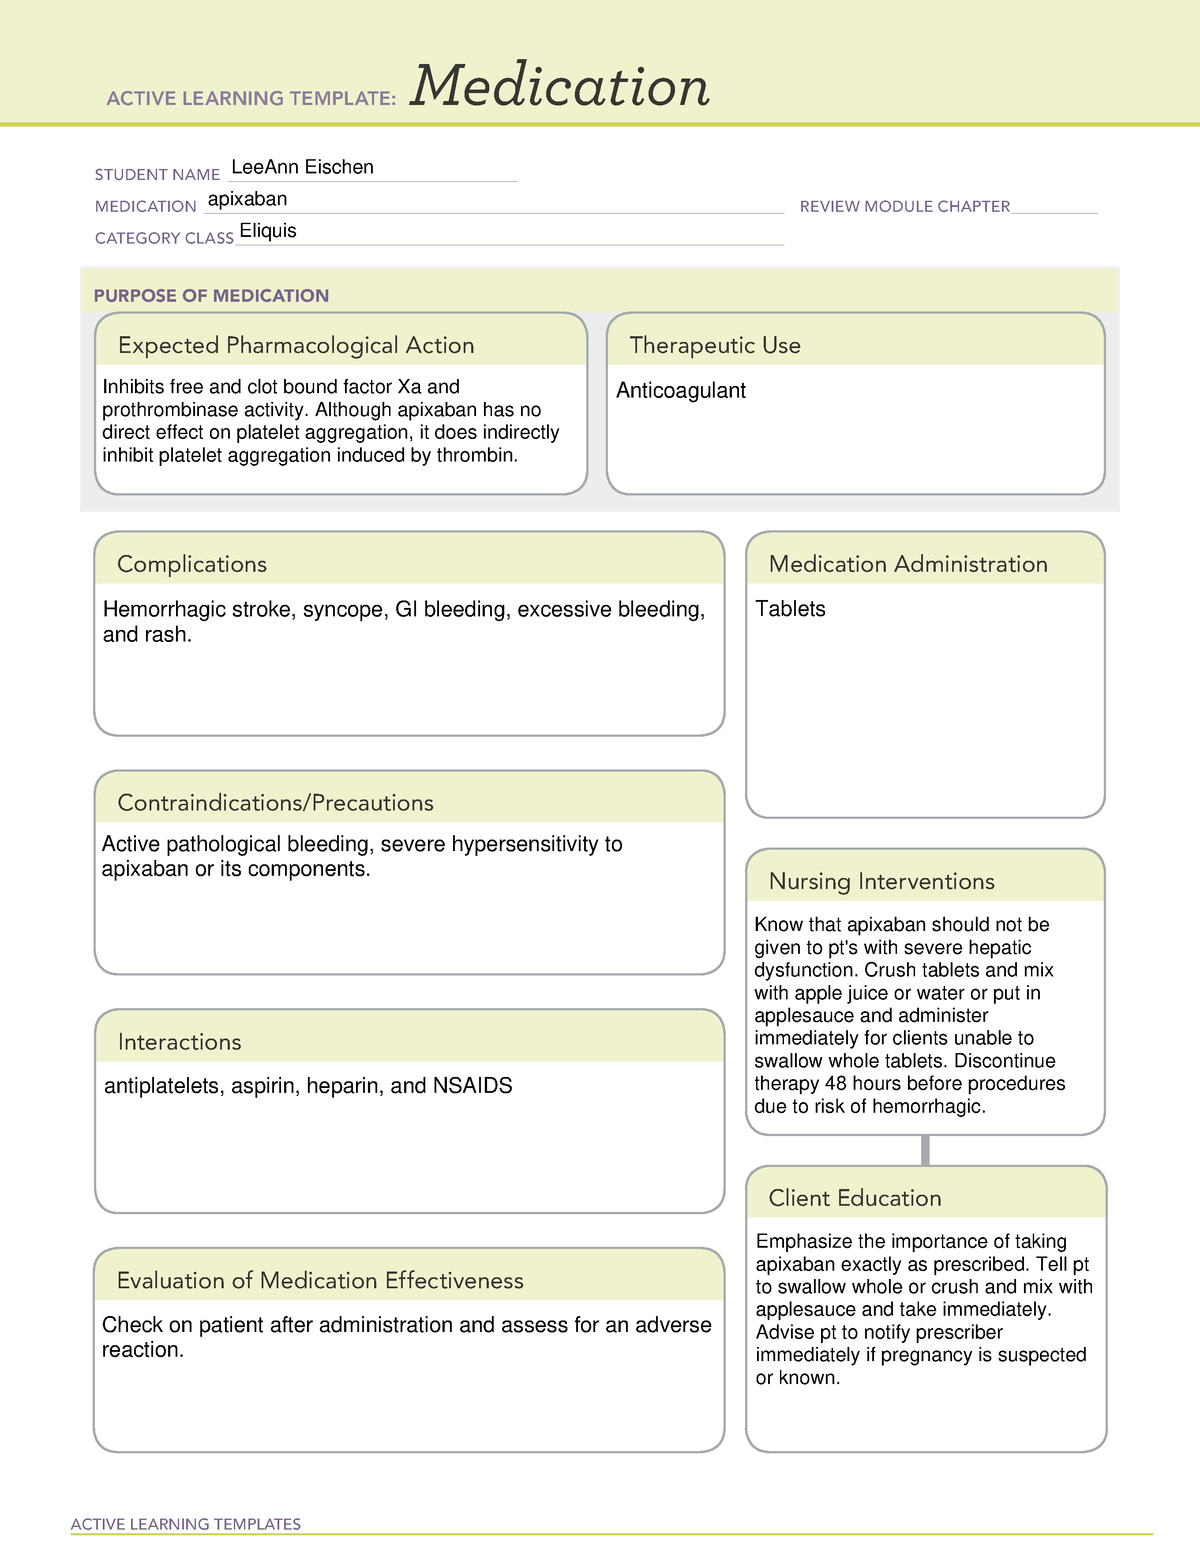 Apixaban Medication Sheet Template ATI ACTIVE LEARNING TEMPLATES Medication STUDENT NAME Studocu